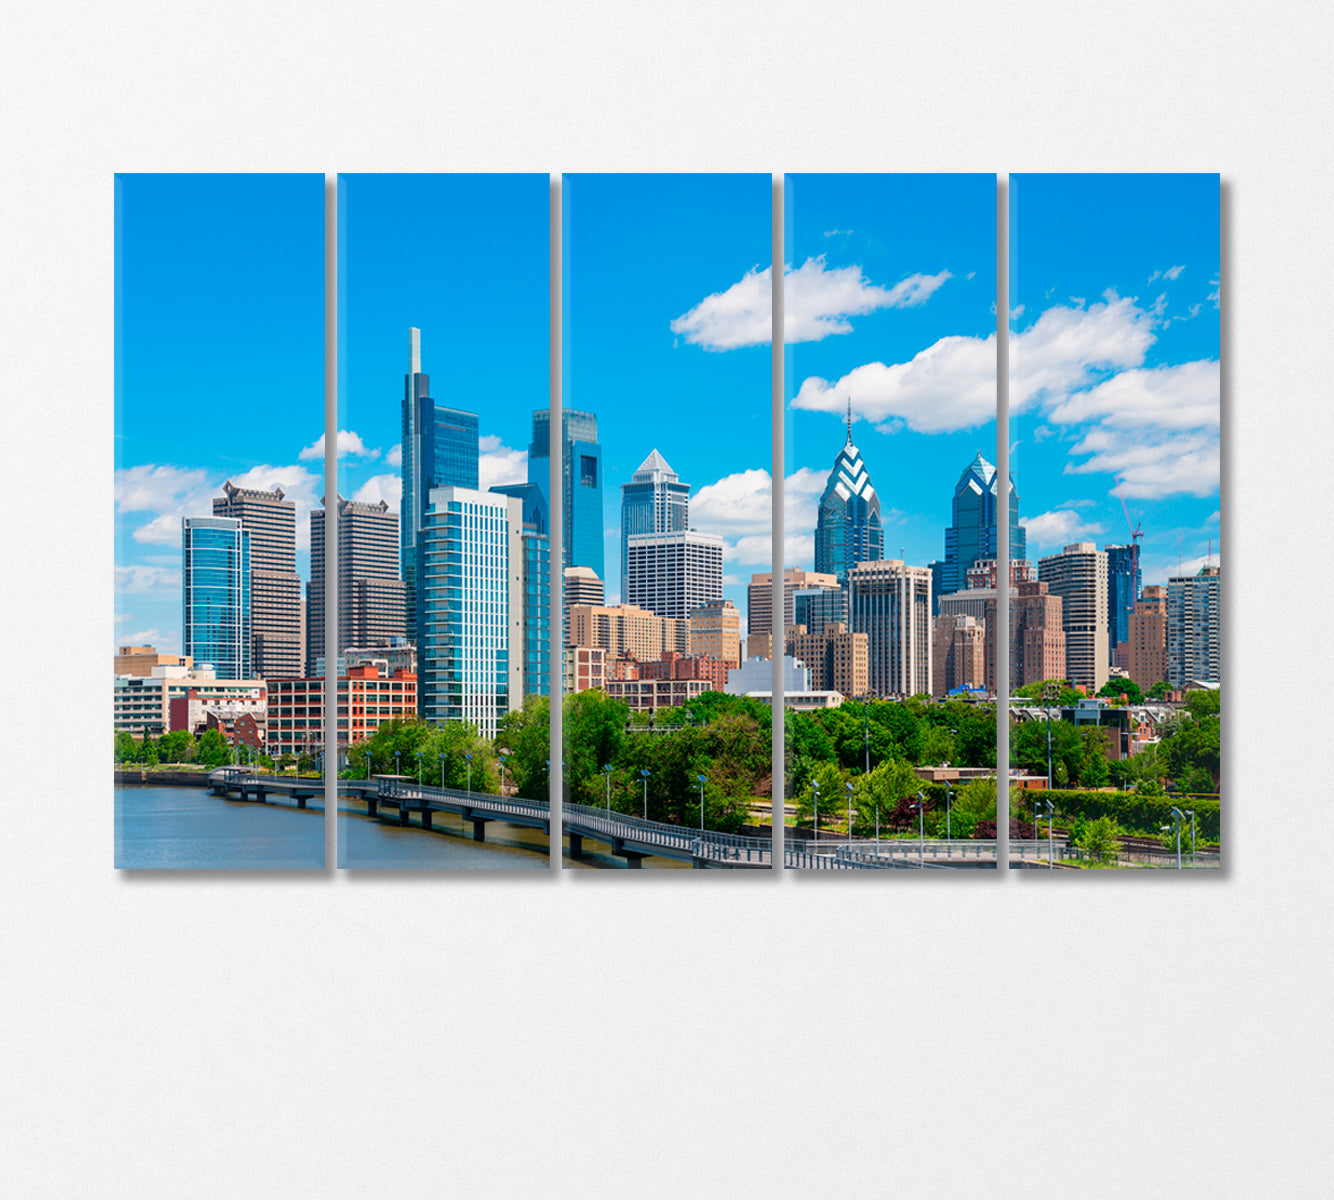 Clear Blue Skies over Philadelphia High Rises Canvas Print-Canvas Print-CetArt-5 Panels-36x24 inches-CetArt